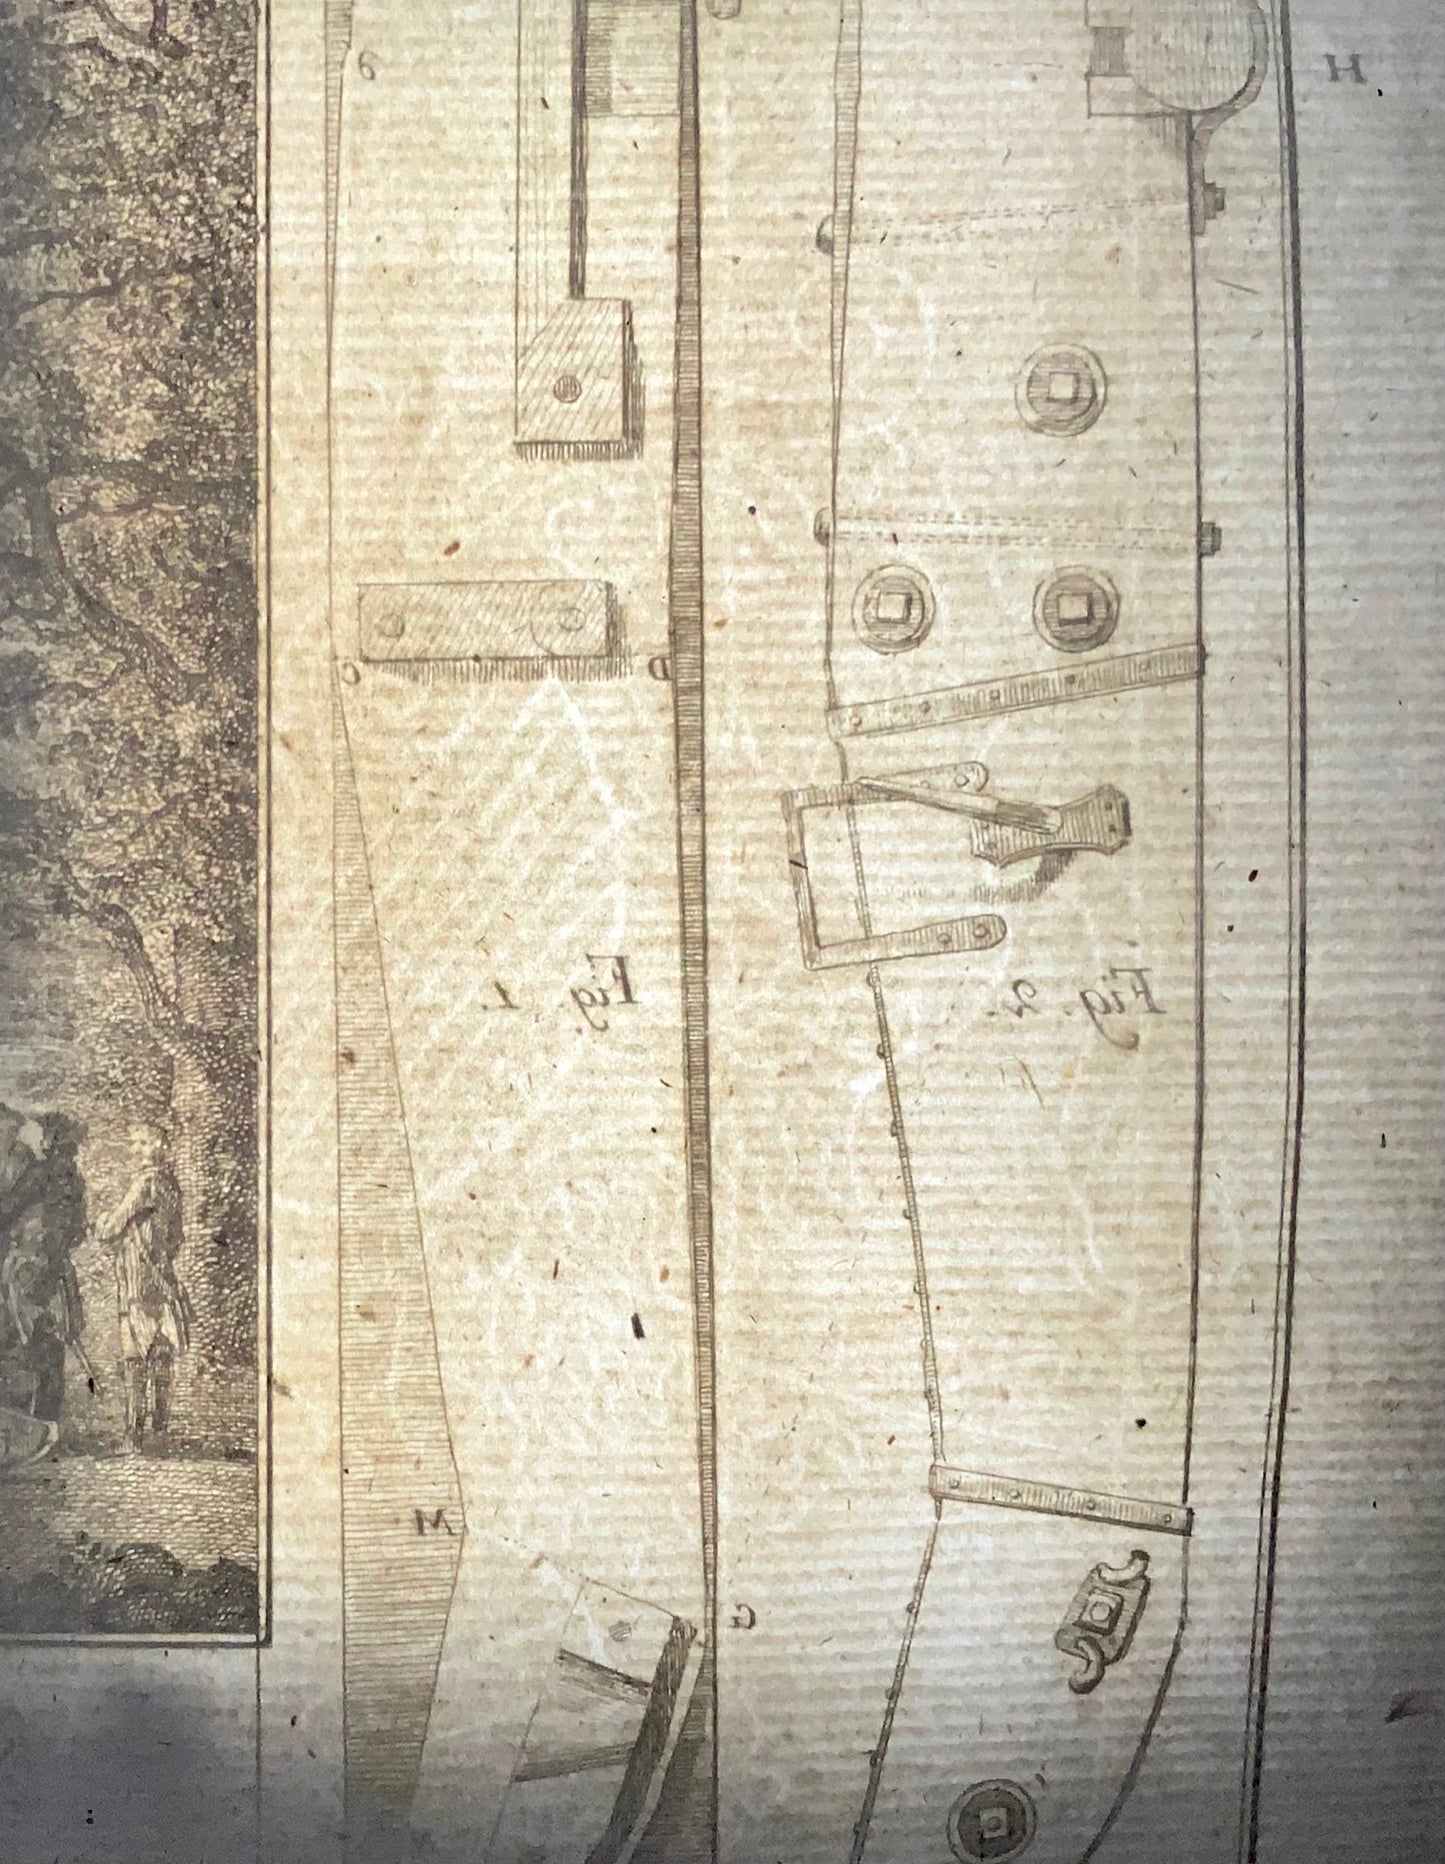 1748 Obusiers d'artillerie de campagne MILITAIRES BROADSIDE Schellenberg 'Von der Lafete'